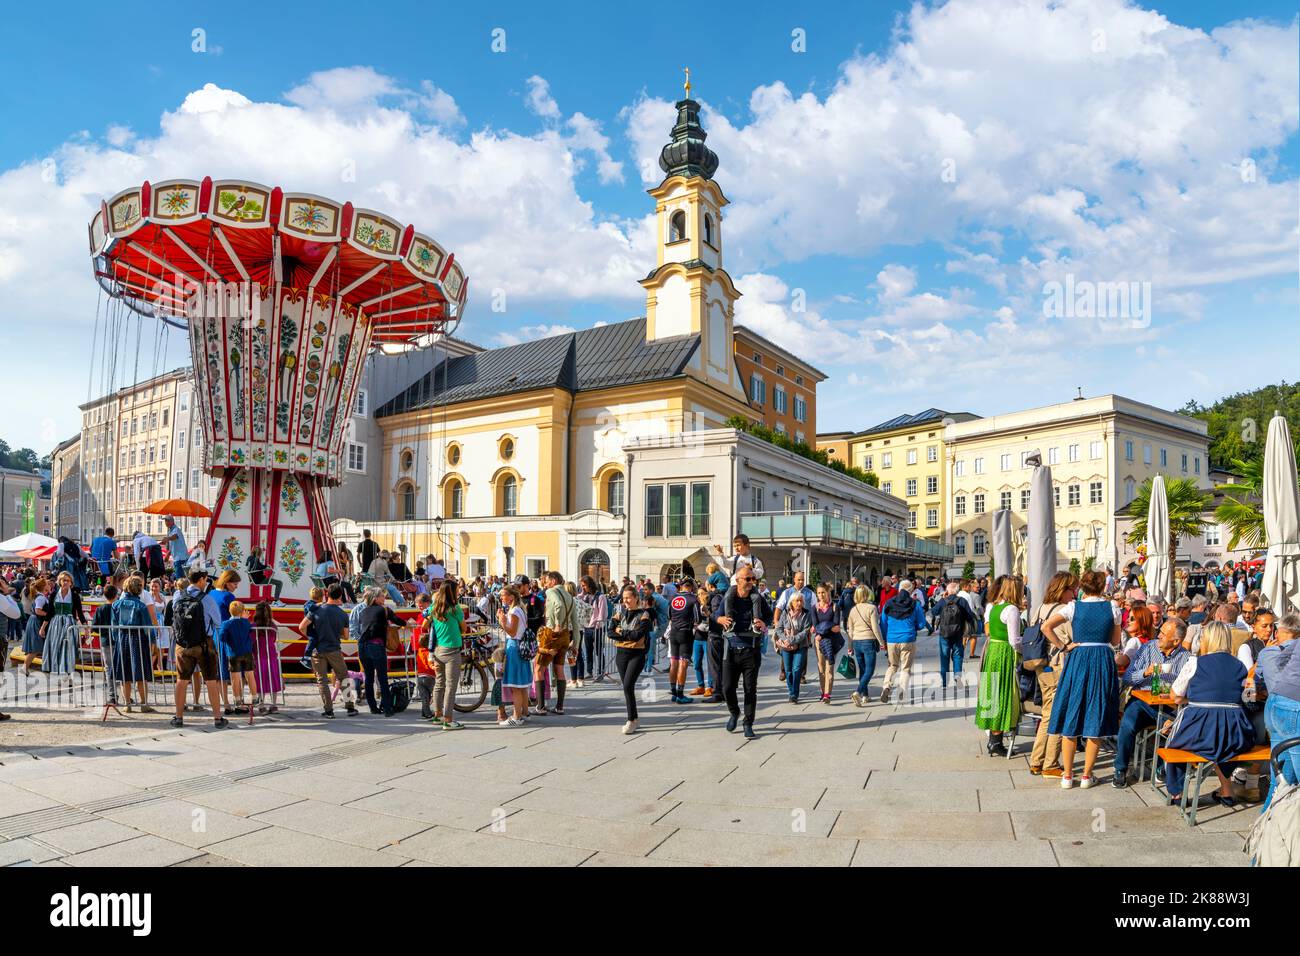 Austrians celebrate Saint Rupert's Day, the patron saint of Salzburg, with festivities, rides, and food booths in Salzburg, Austria. Stock Photo